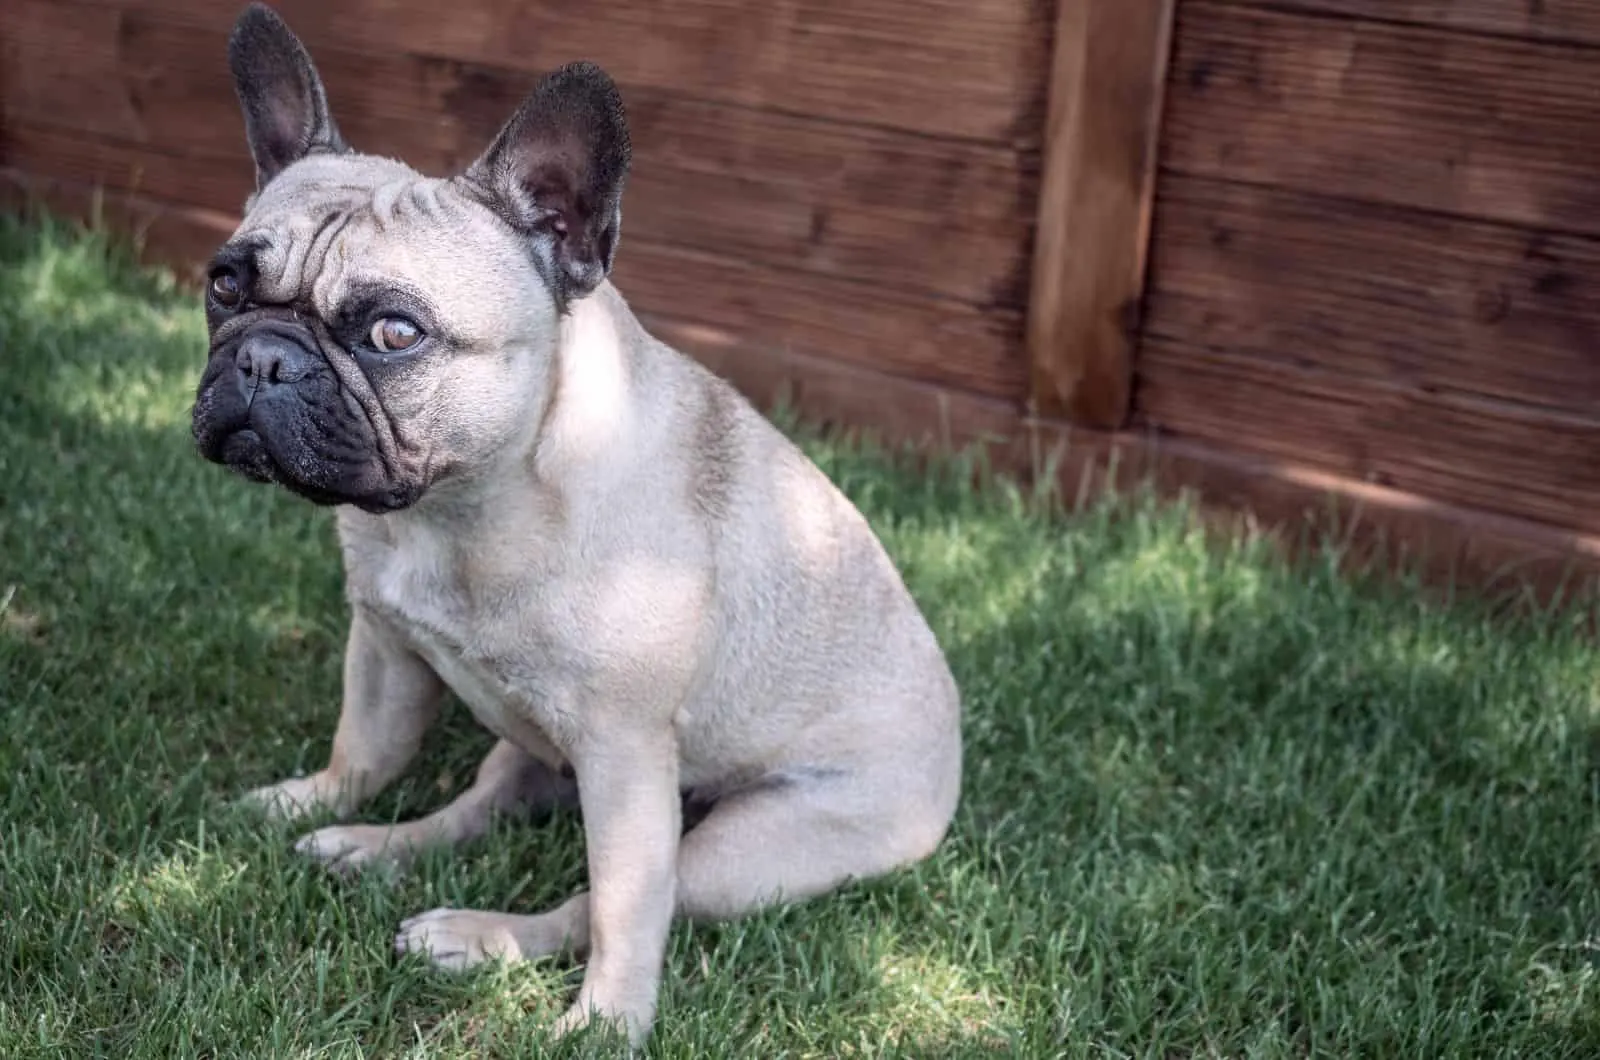 Mini French Bulldog sitting on grass